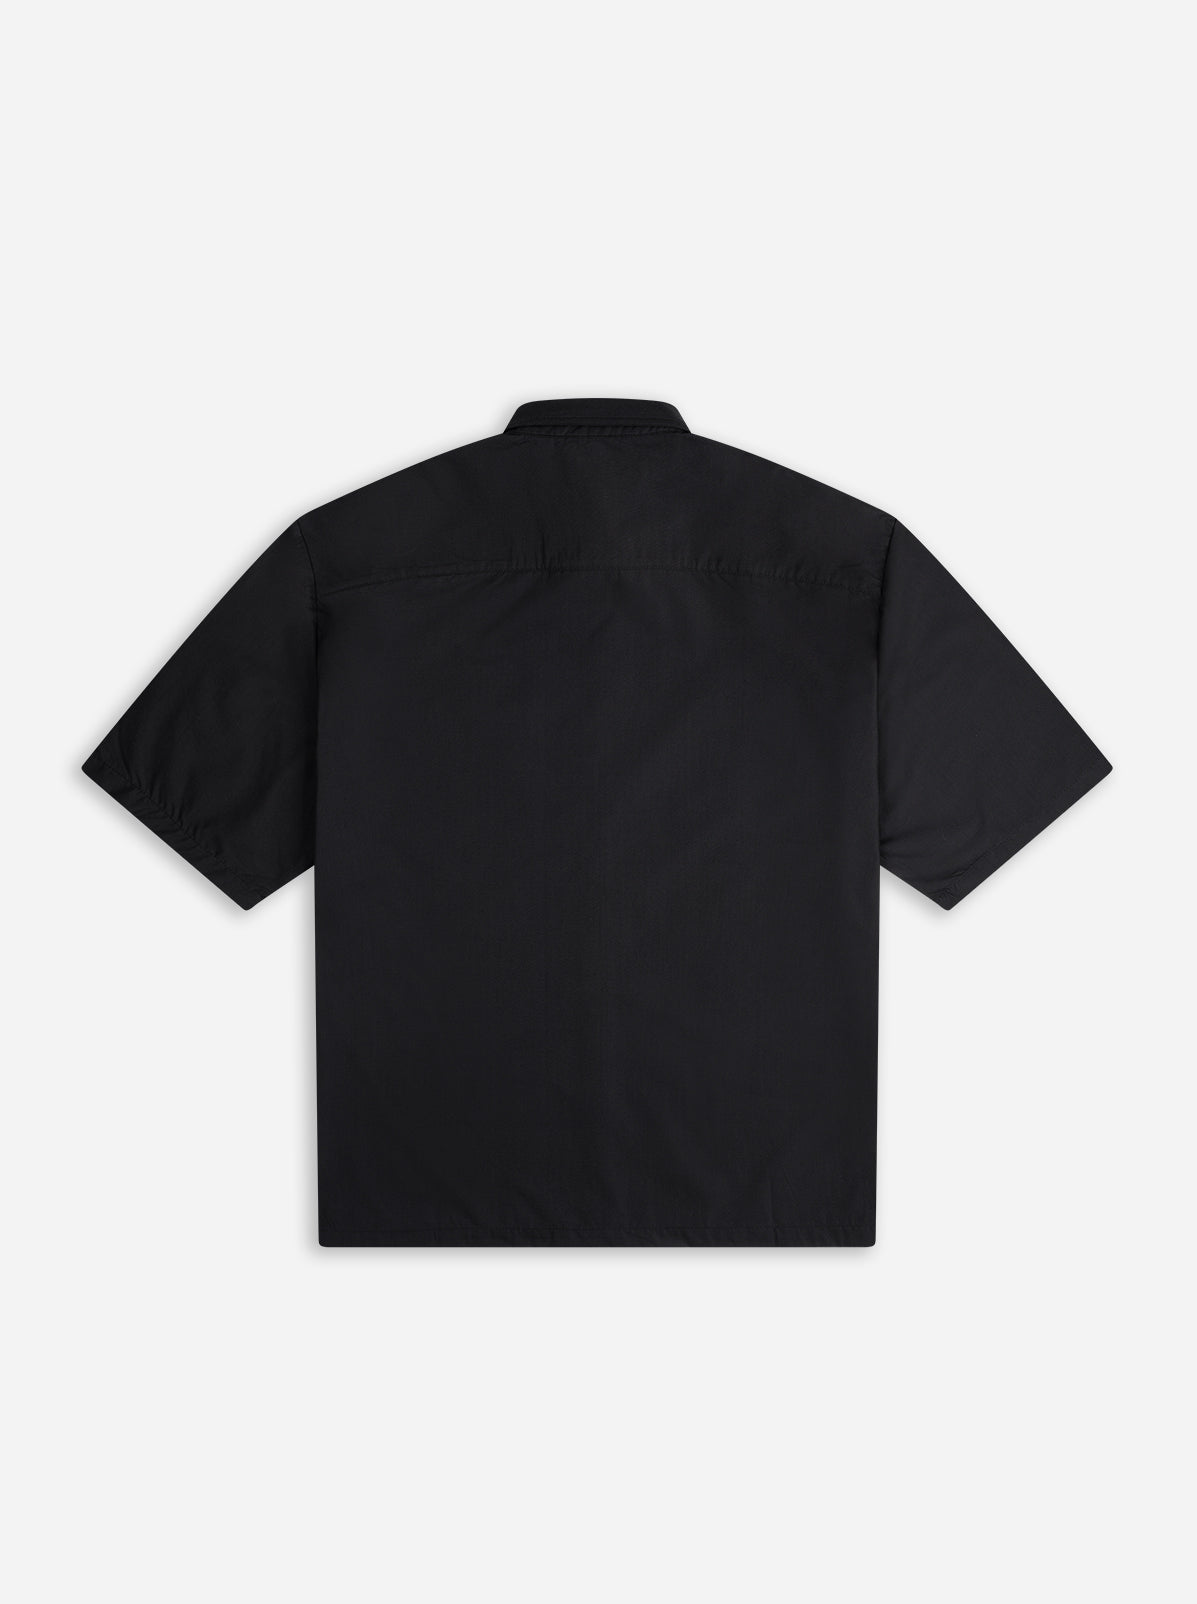 "Back2Business" Shirt - Black